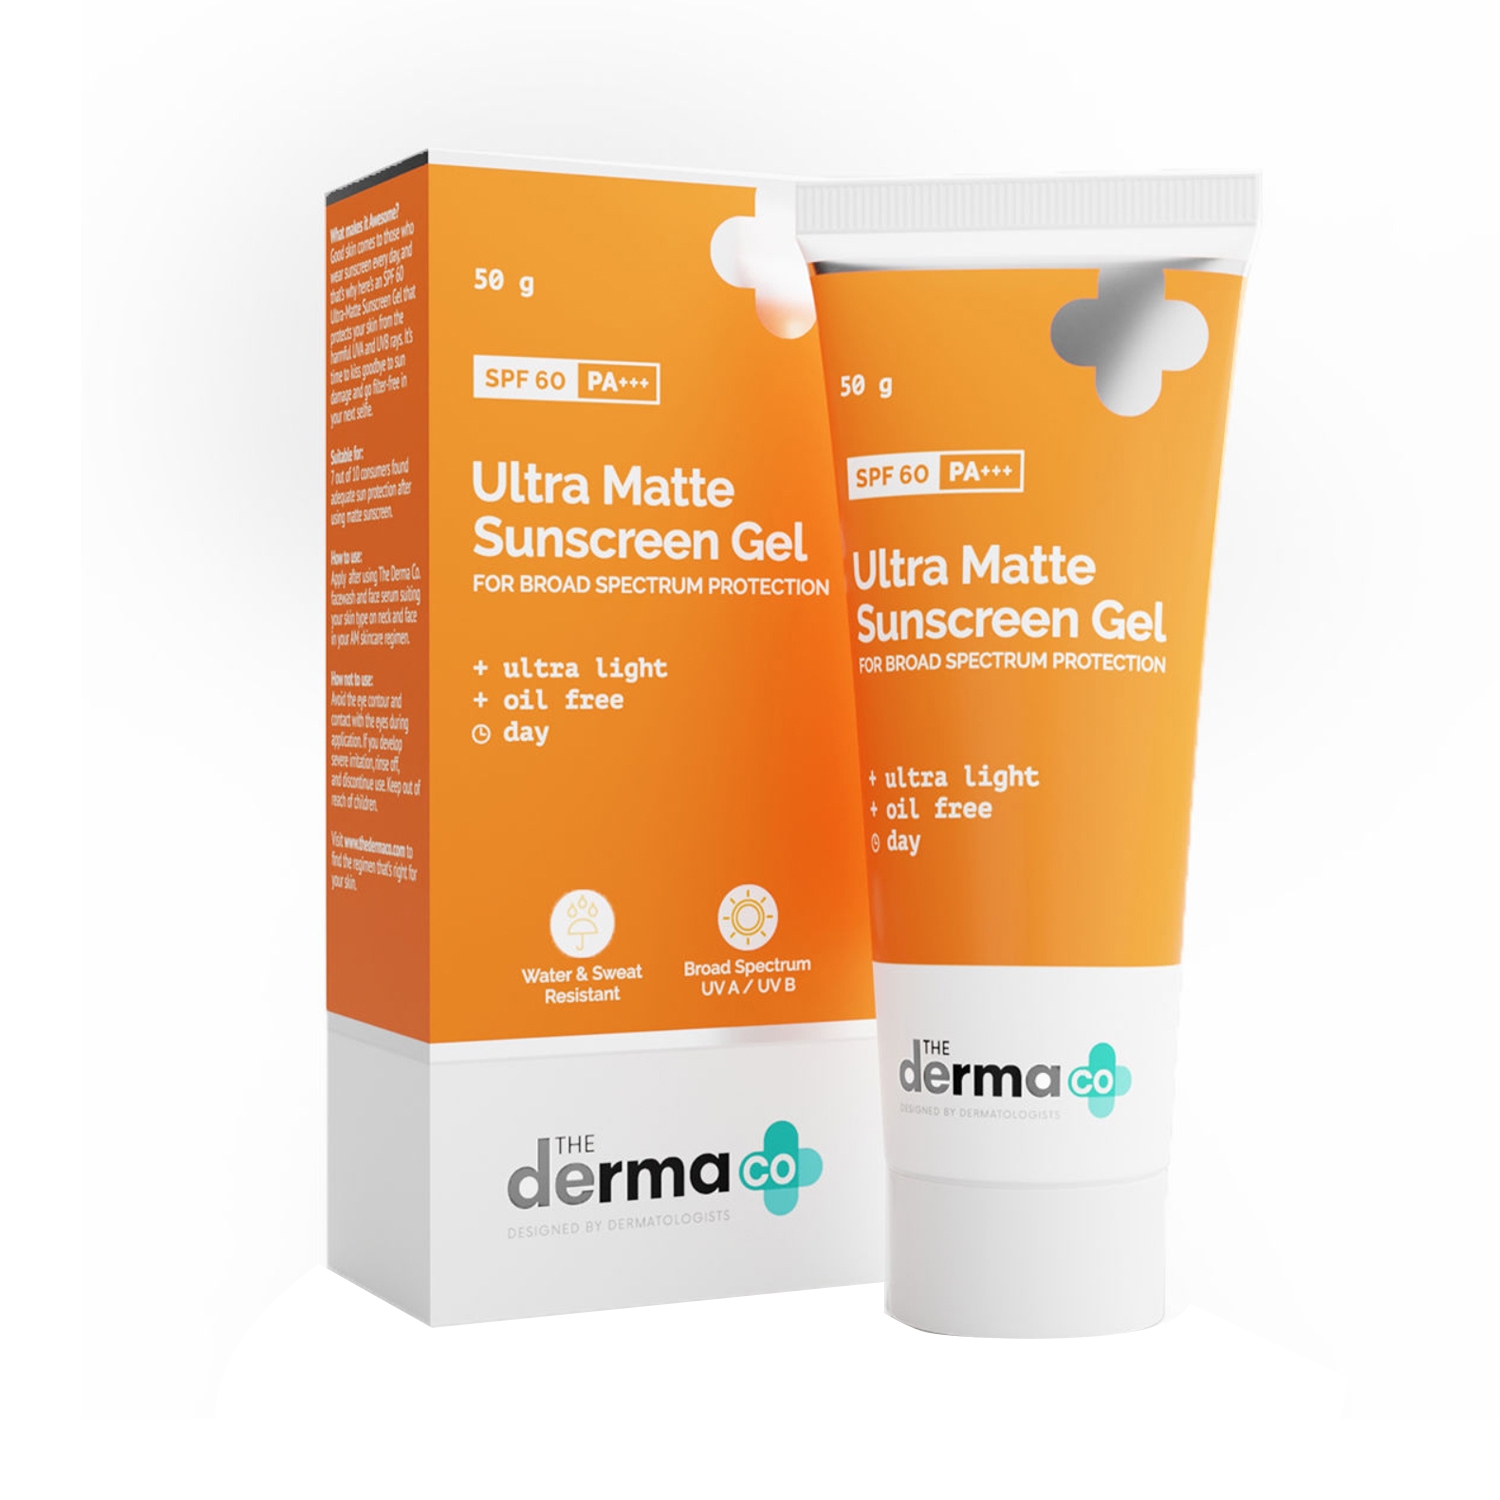 The Derma Co | The Derma Co Ultra Matte Sunscreen Gel SPF 60 PA++ (50g)